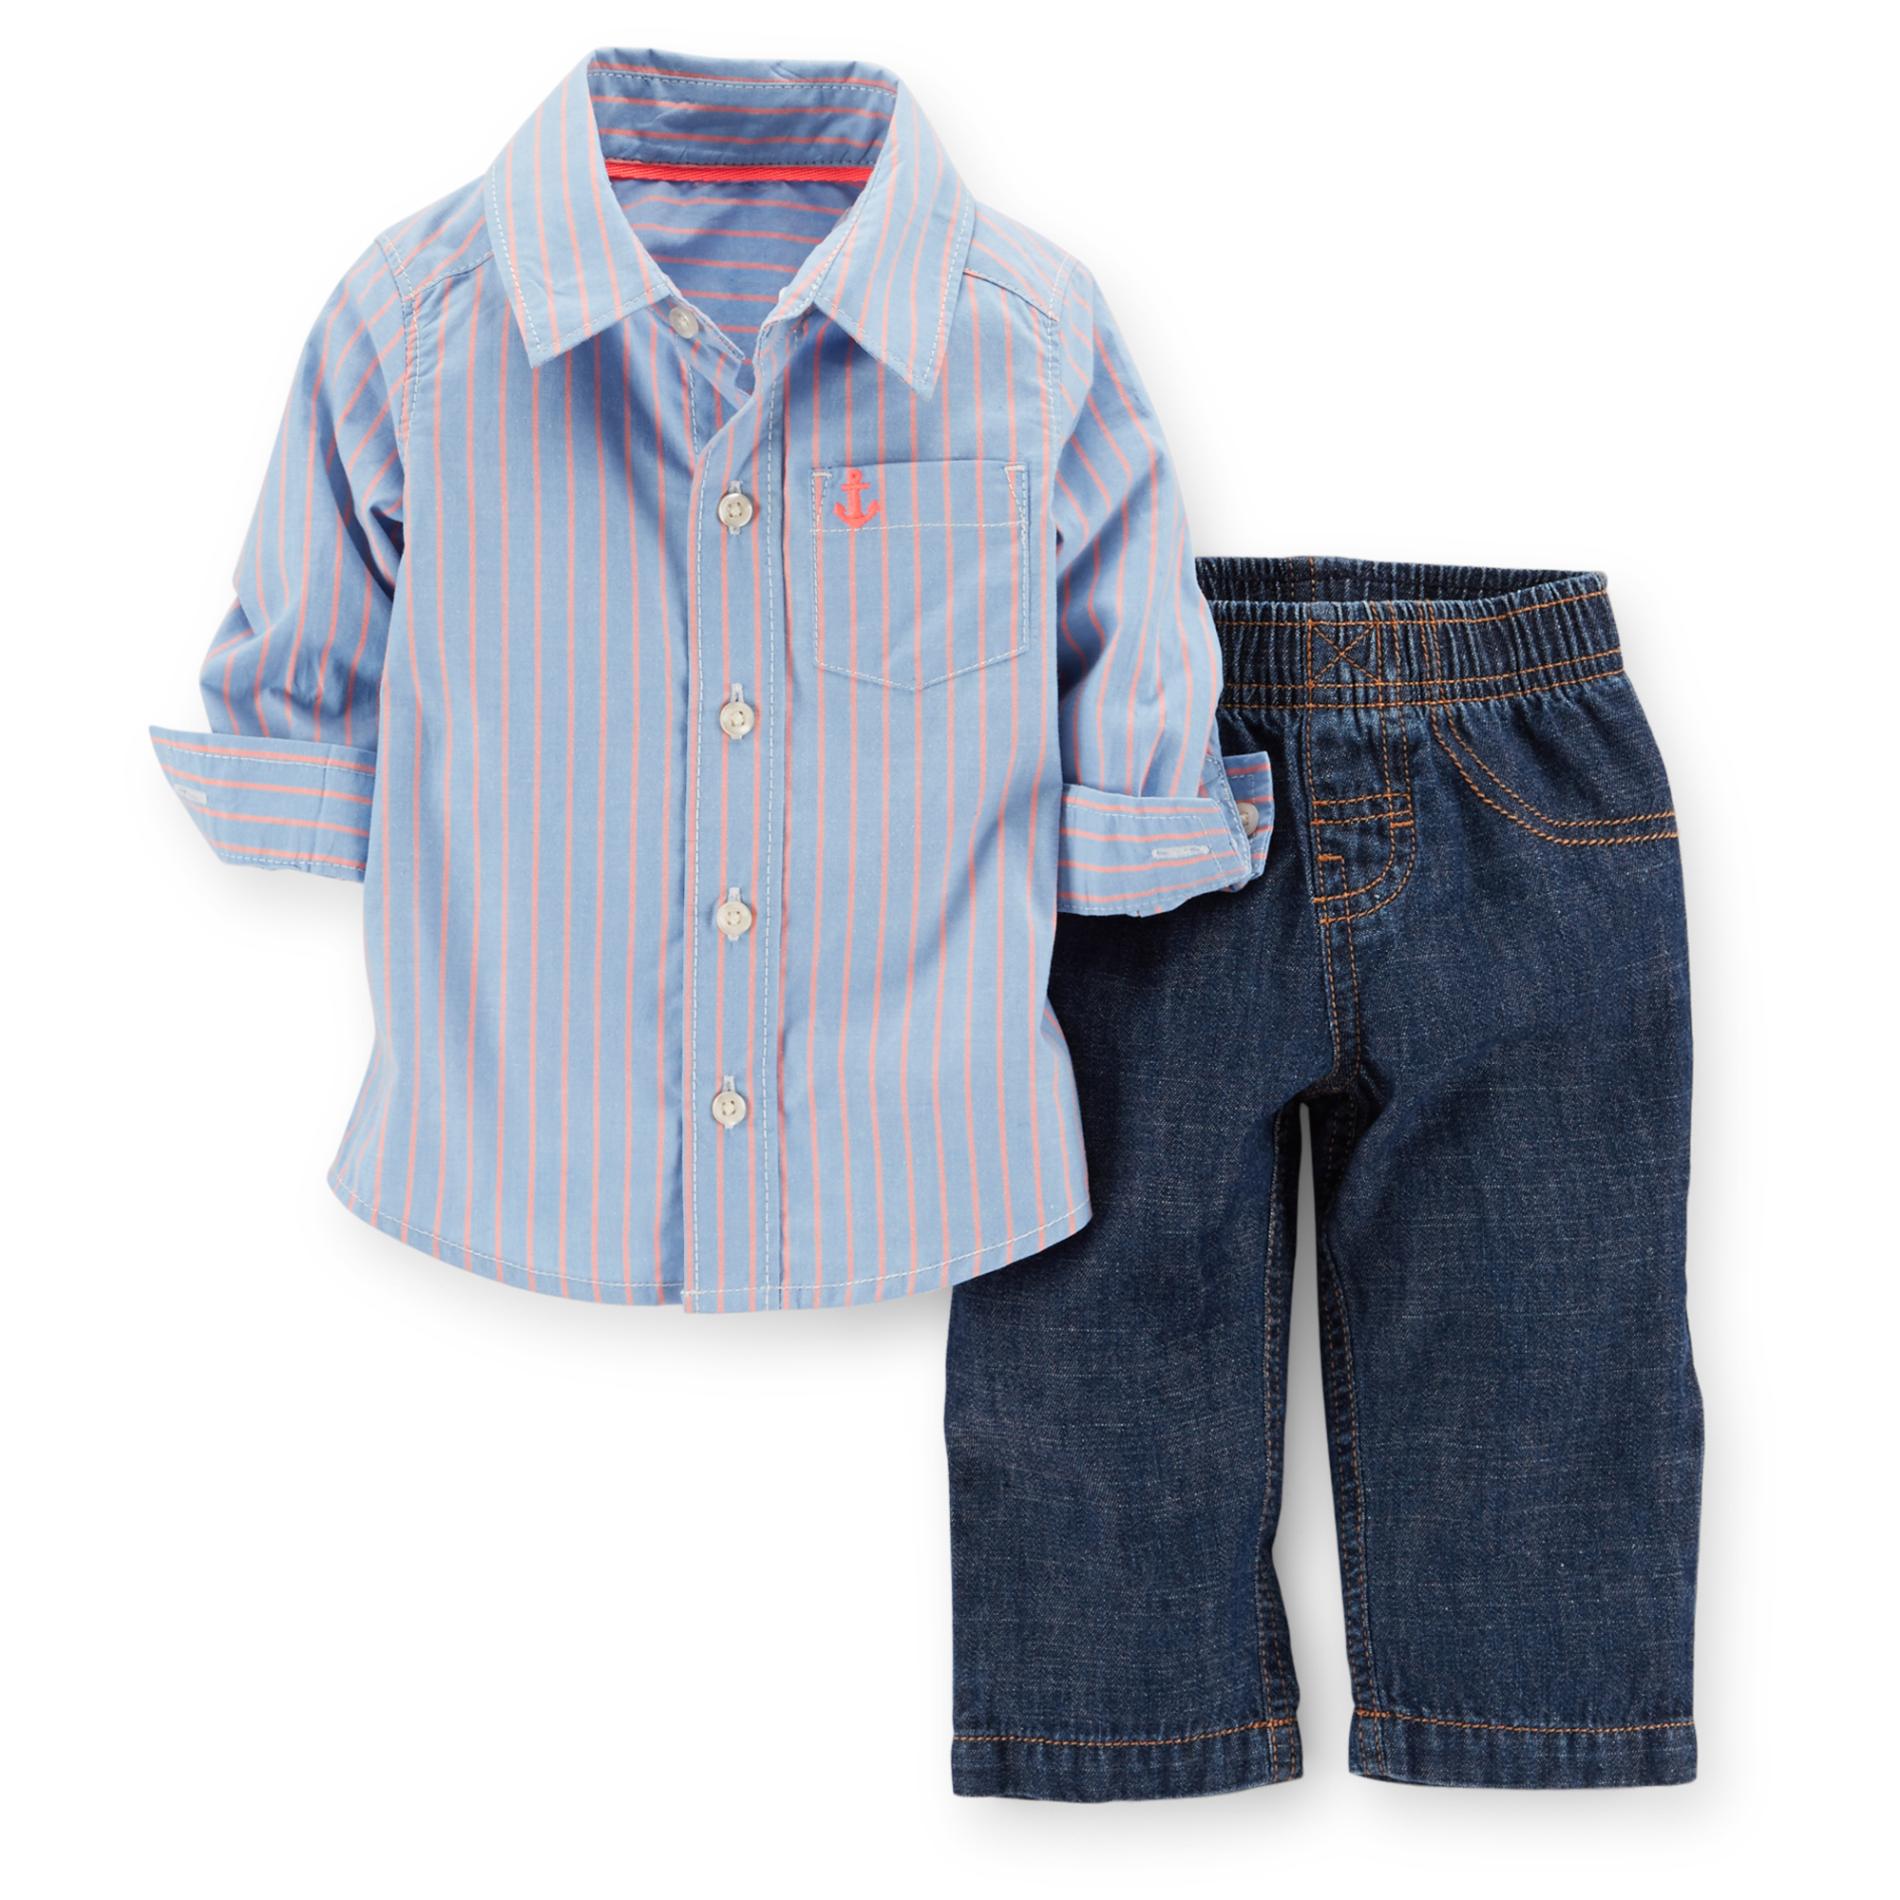 Carter's Newborn & Infant Boy's Button-Front Shirt & Jeans - Striped